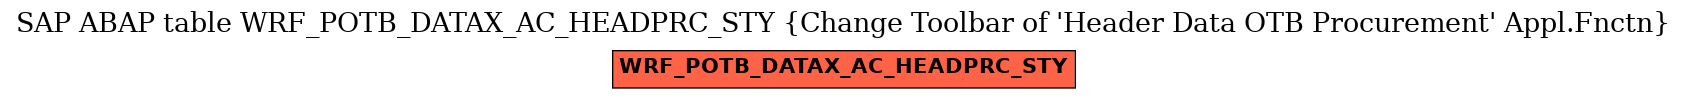 E-R Diagram for table WRF_POTB_DATAX_AC_HEADPRC_STY (Change Toolbar of 